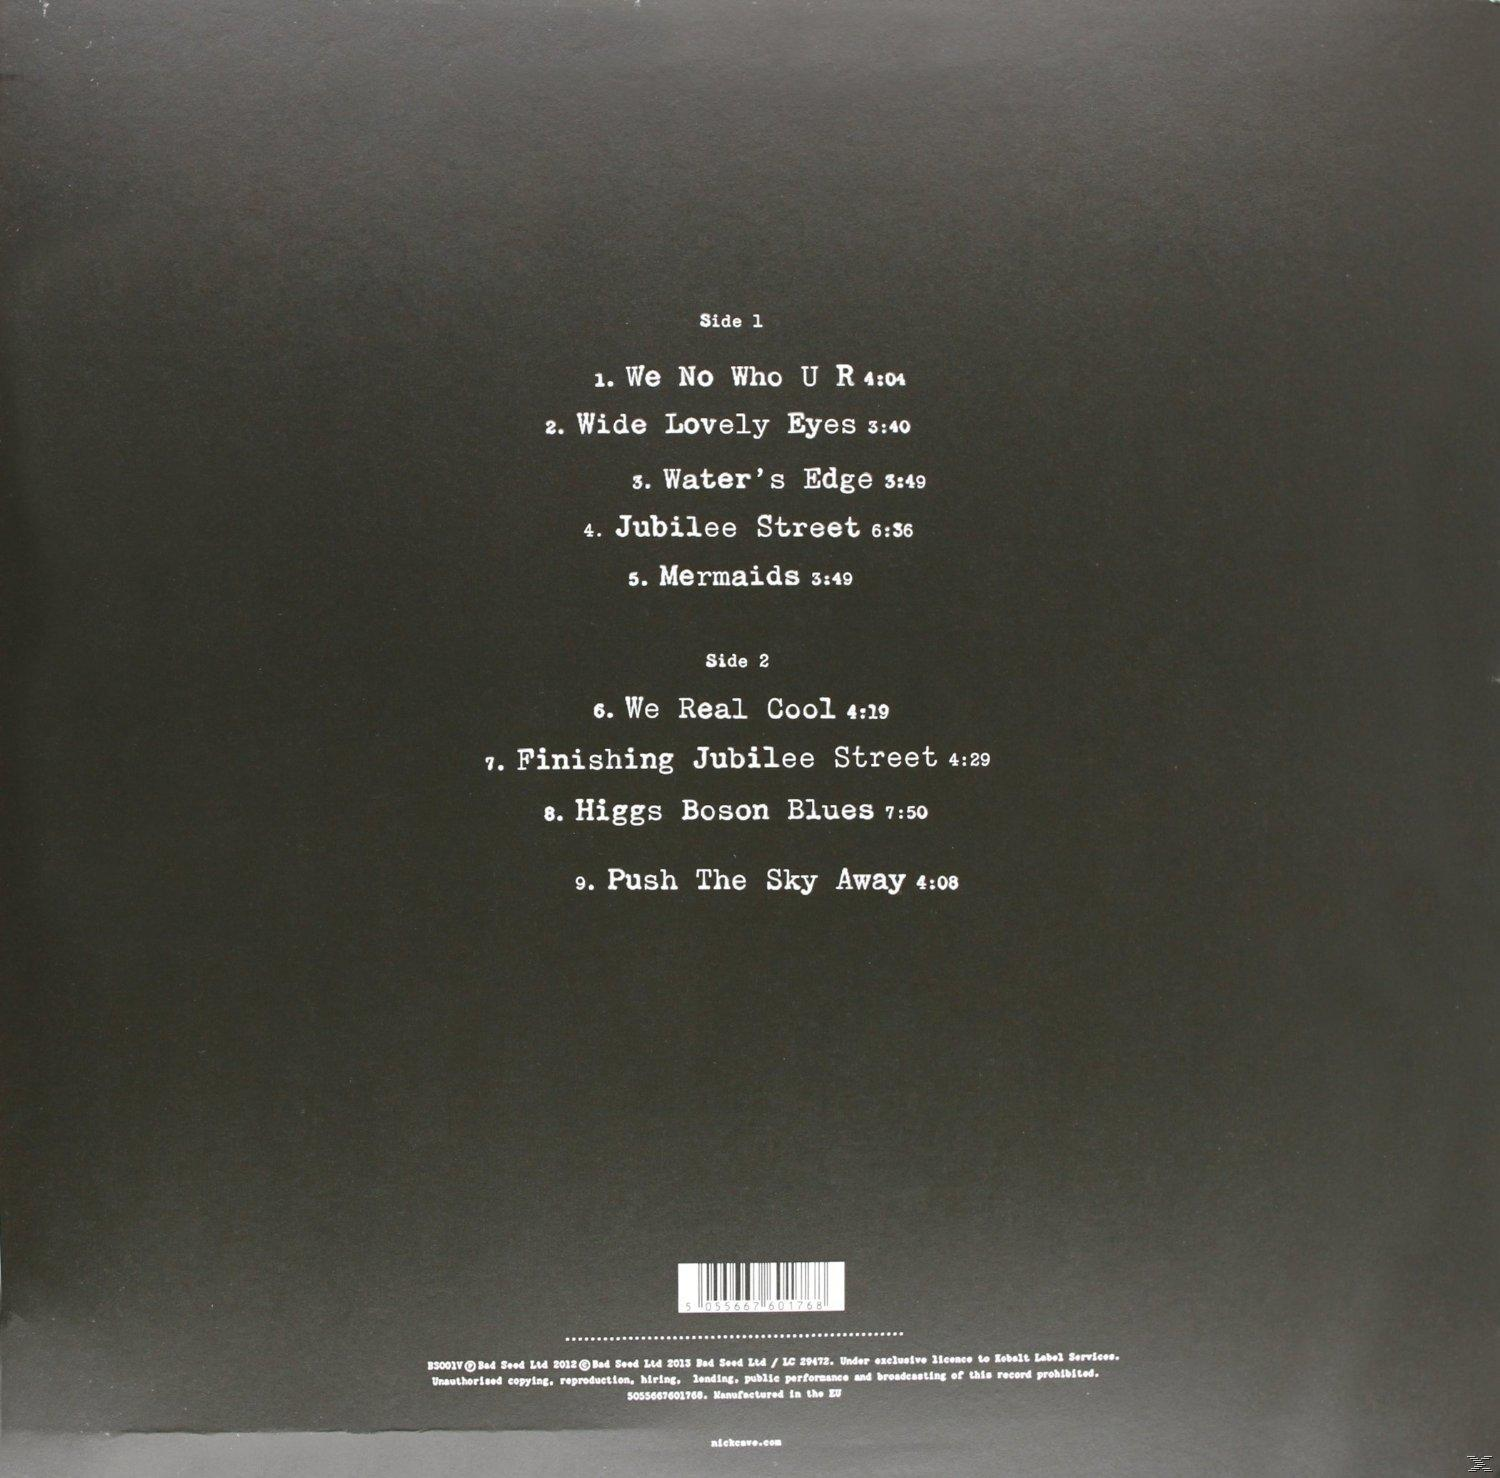 Nick Cave & The Bad SKY Seeds PUSH AWAY (Vinyl) - - THE (180G+MP3)